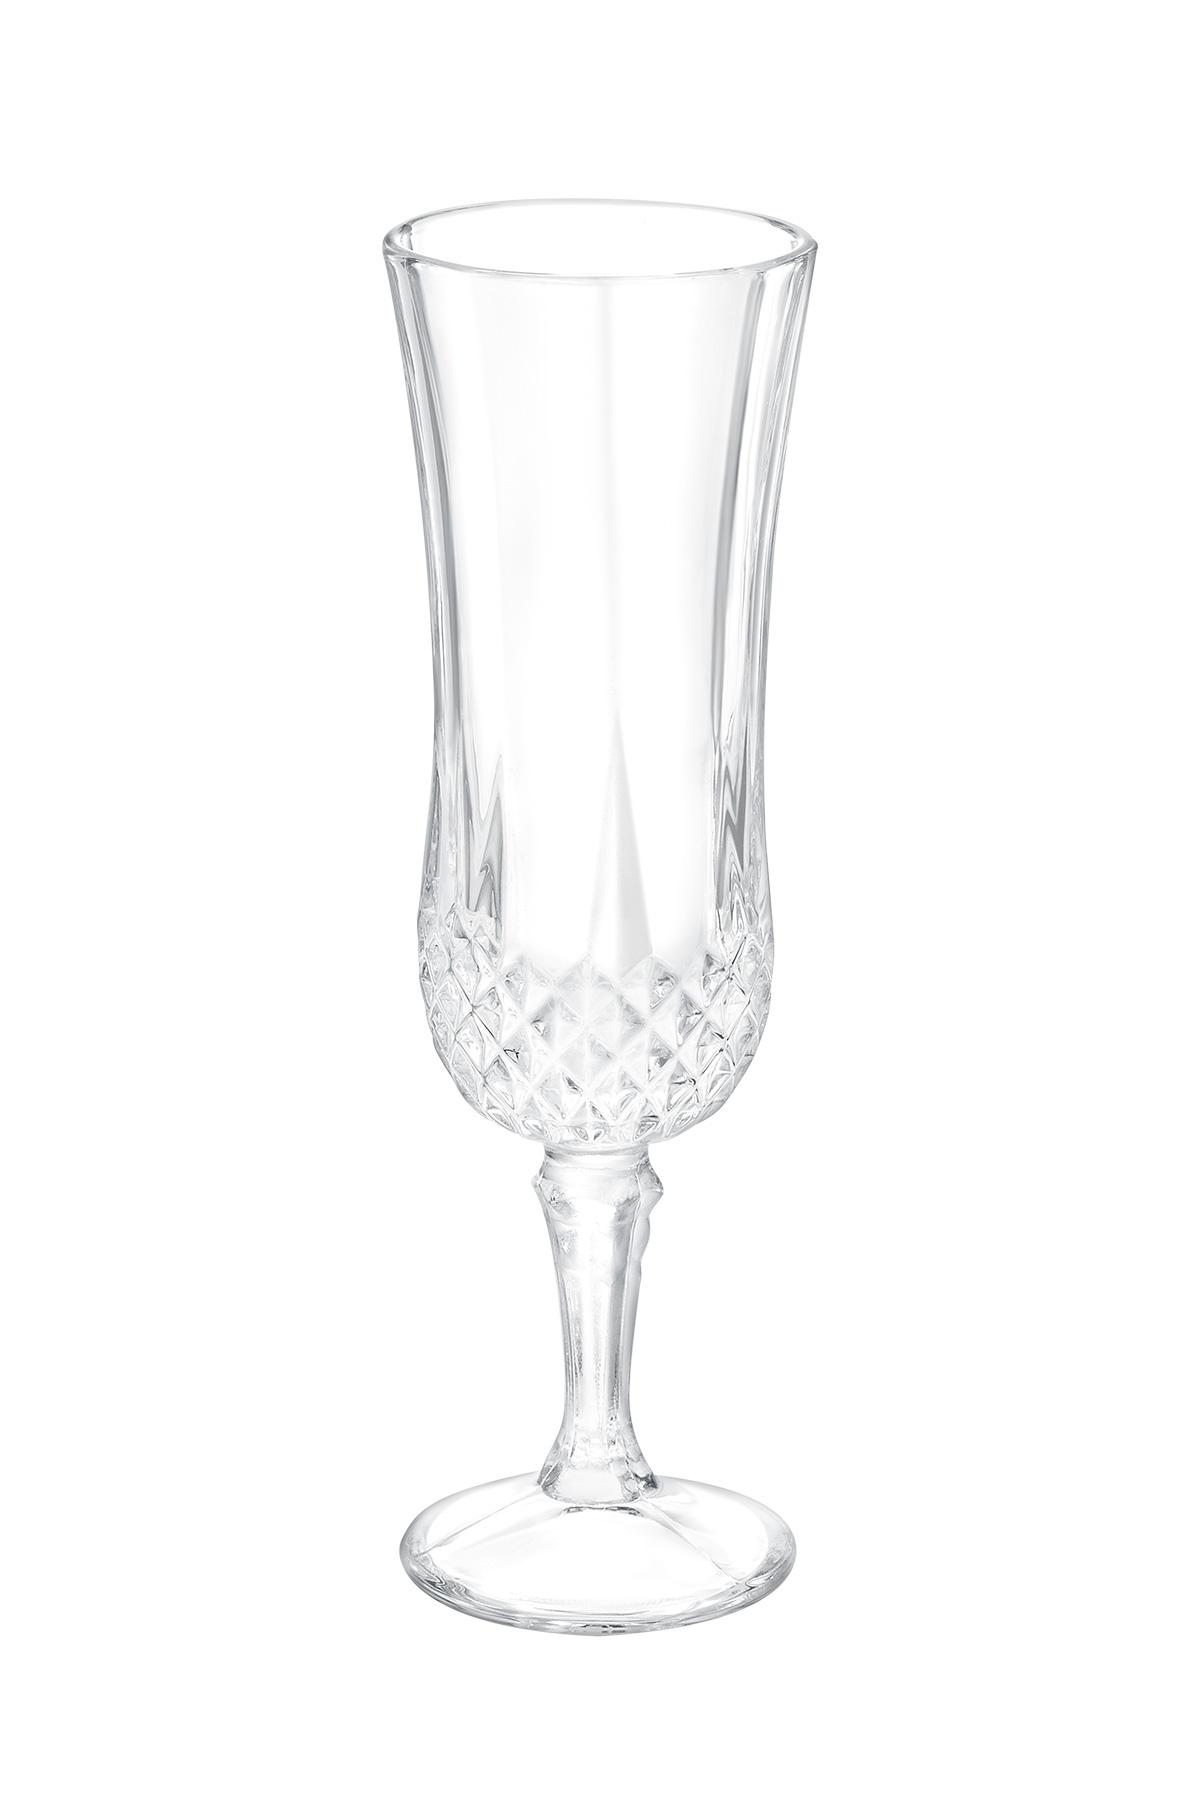 Selected image for MADAME COCO Audrey Set čaša za šampanjac, 4kom, 170ml, 6x2cm